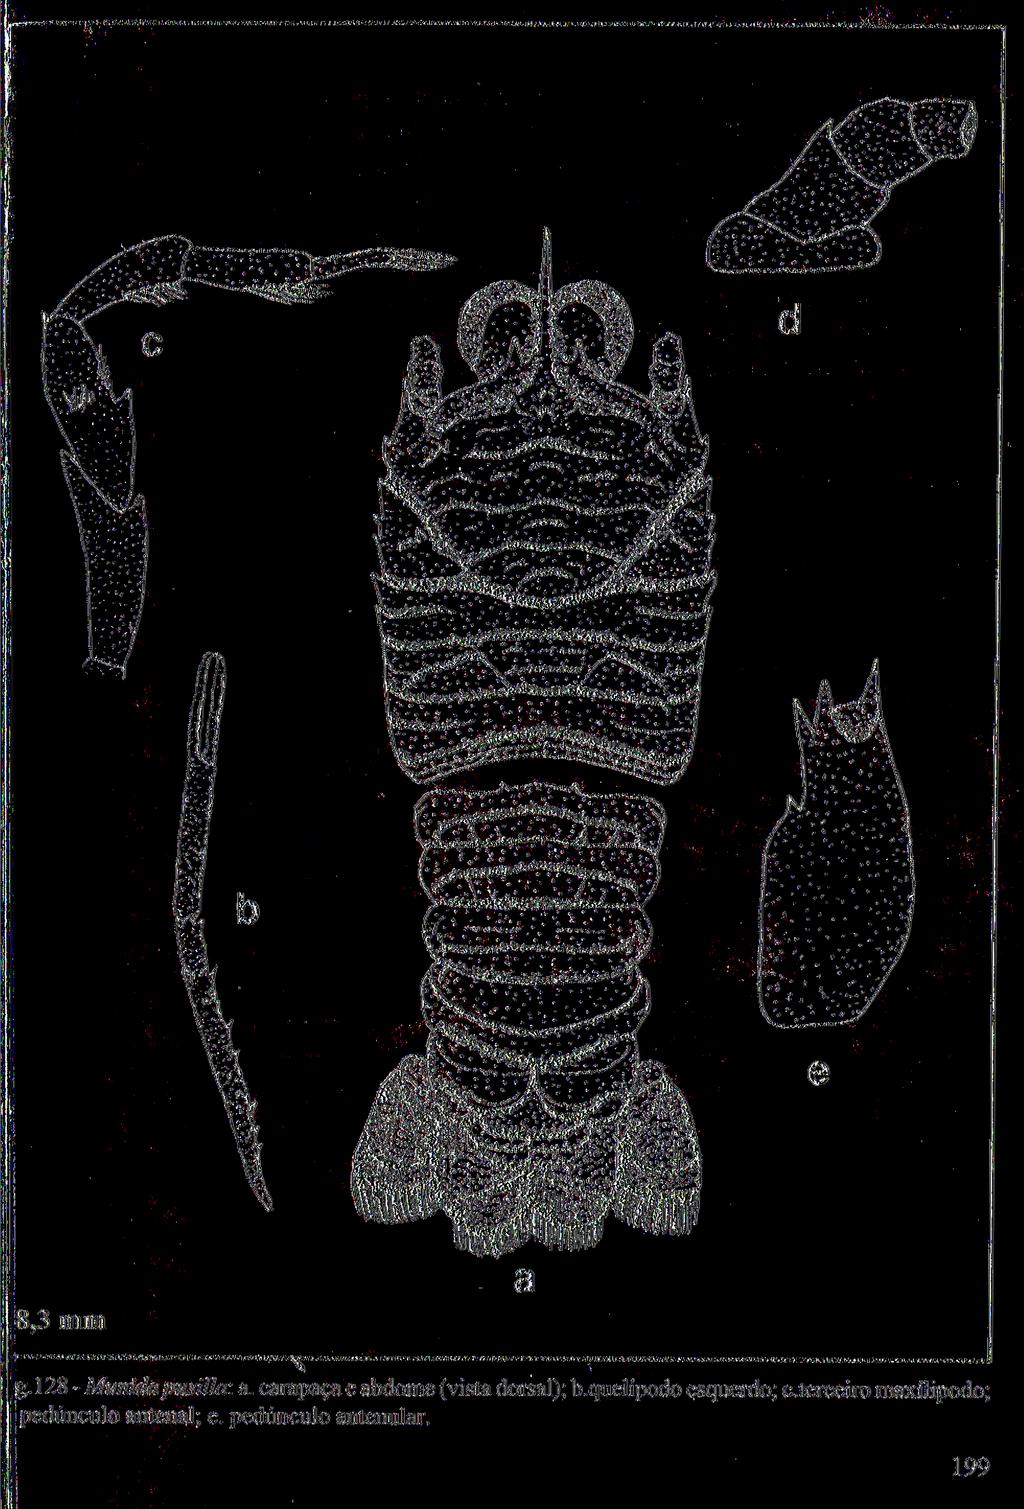 g. 128 - Munida pusiíla: a. carapaça e abdome (vista dorsal); b.